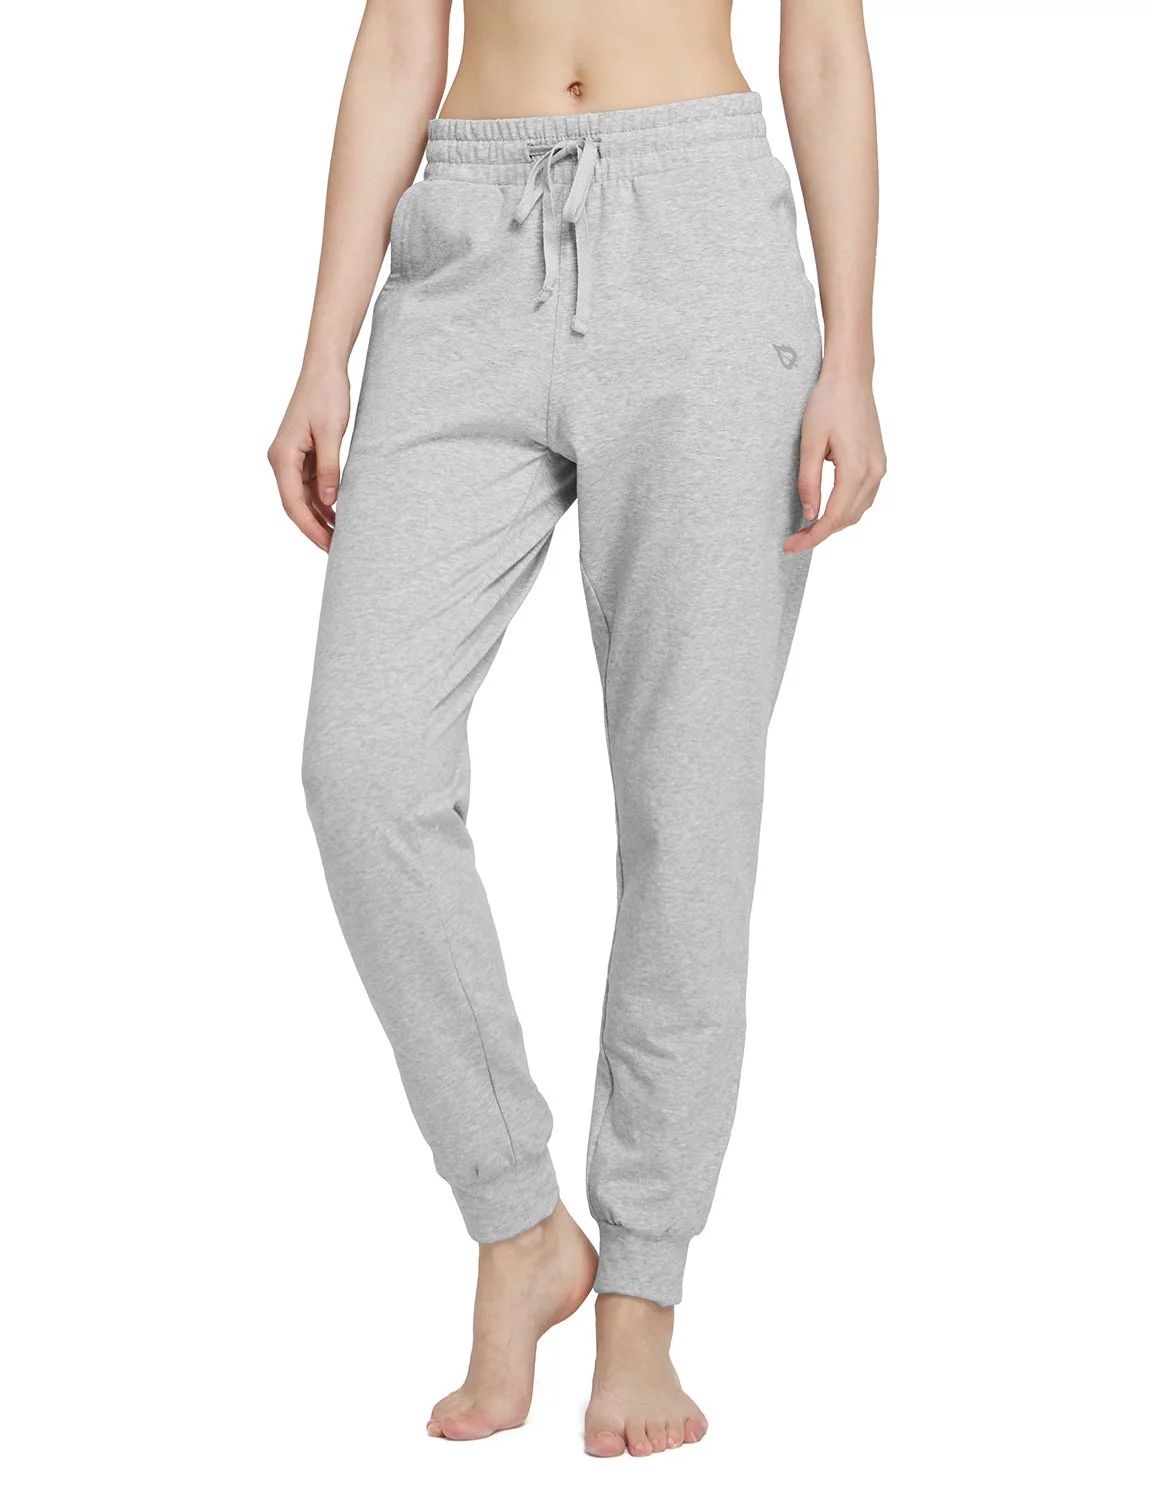 BALEAF Women's Sweatpants Joggers Cotton Yoga Lounge Sweat Pants Casual Running Tapered Pants wit... | Walmart (US)